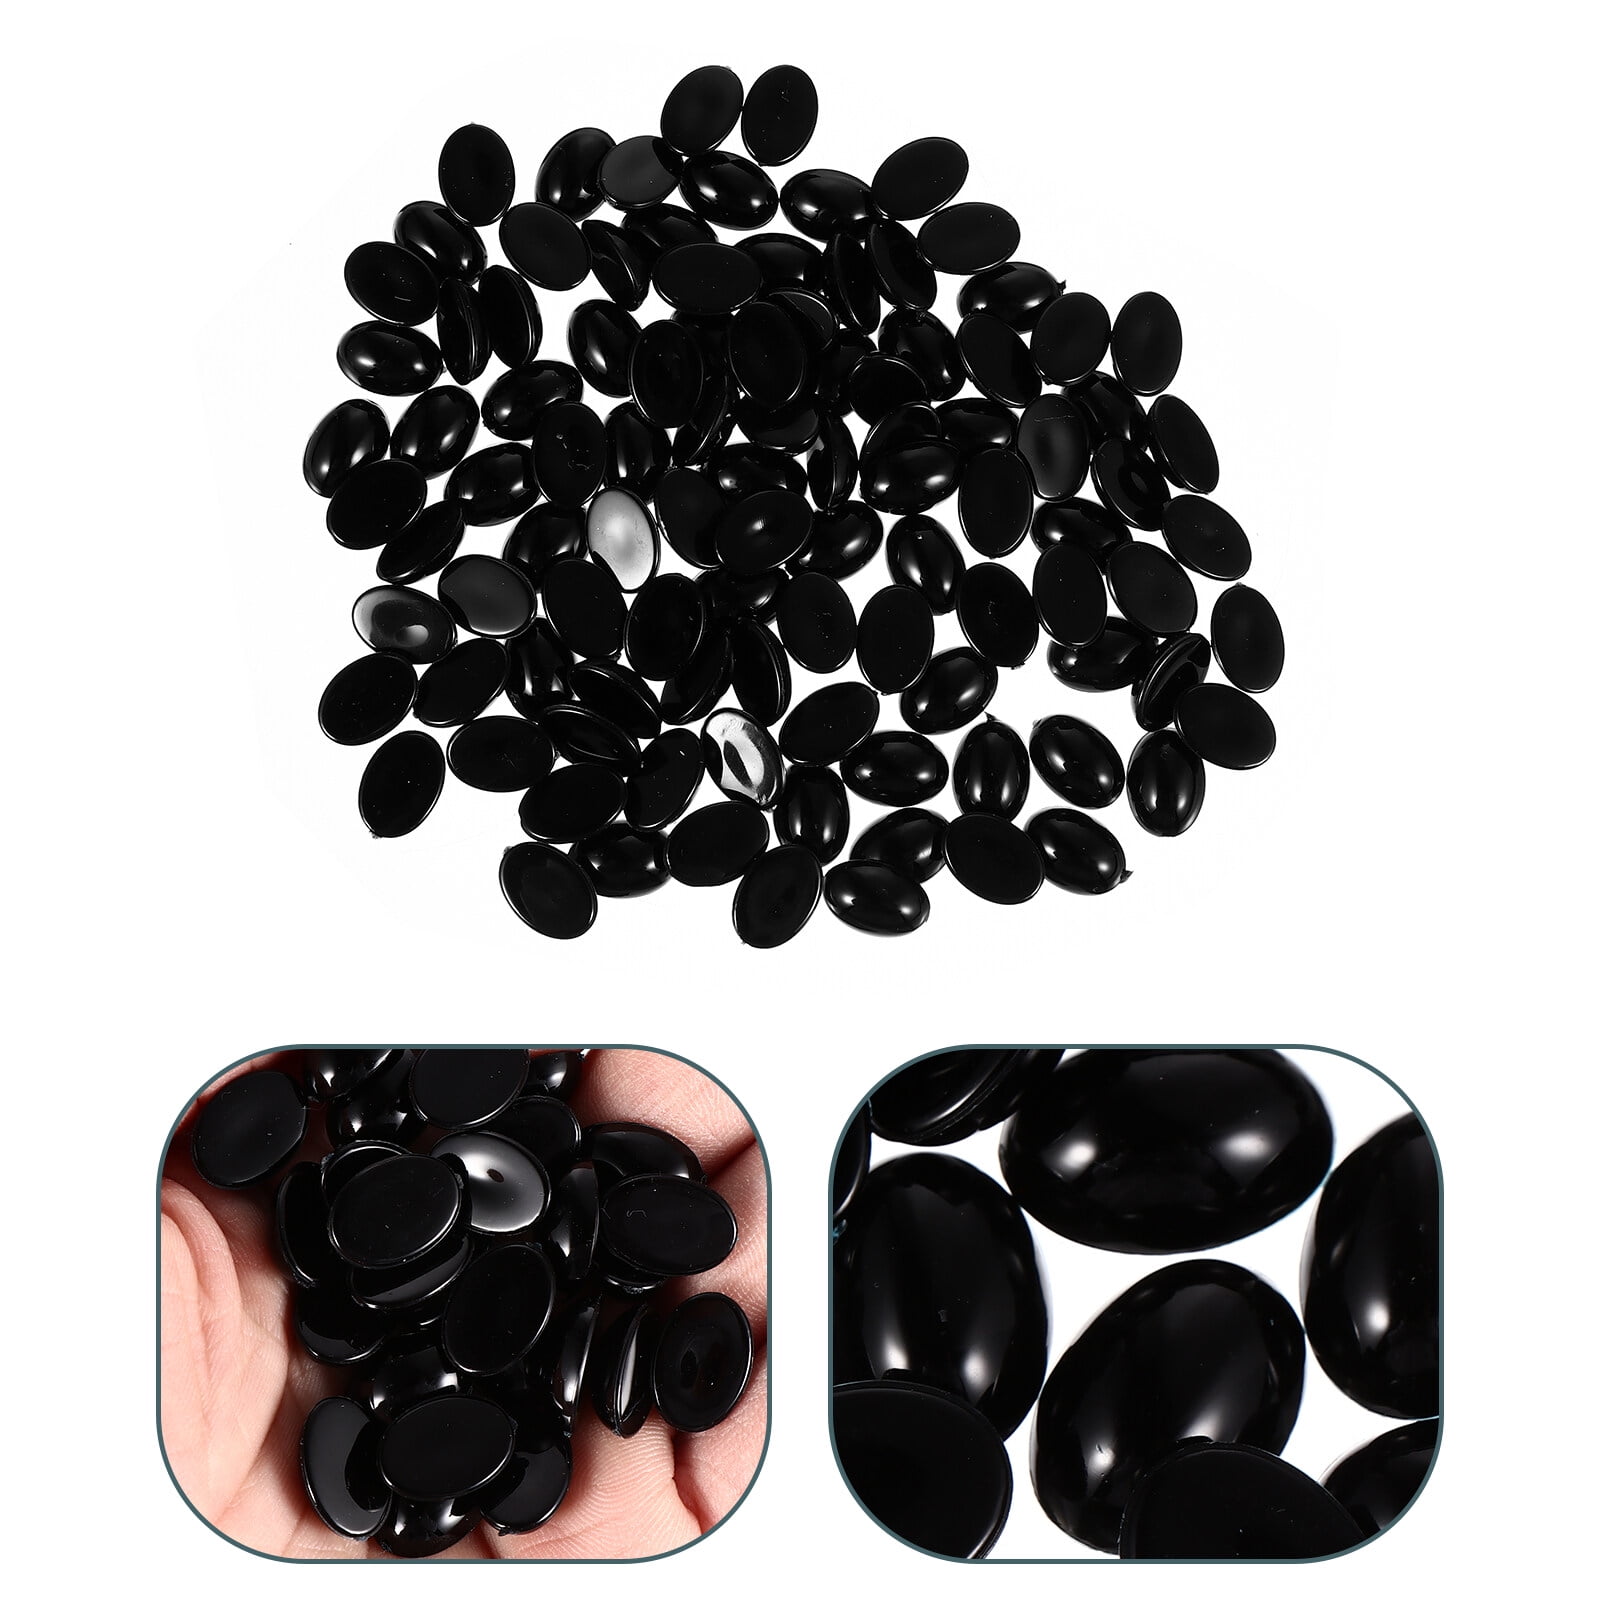 50pcs Black Oval Safety Eyes/ Noses --4x6/6x8/10x7/12x9/13x10/15x10.5mm  amigurumi eyes/ plastic eyes for crochet toys and plush